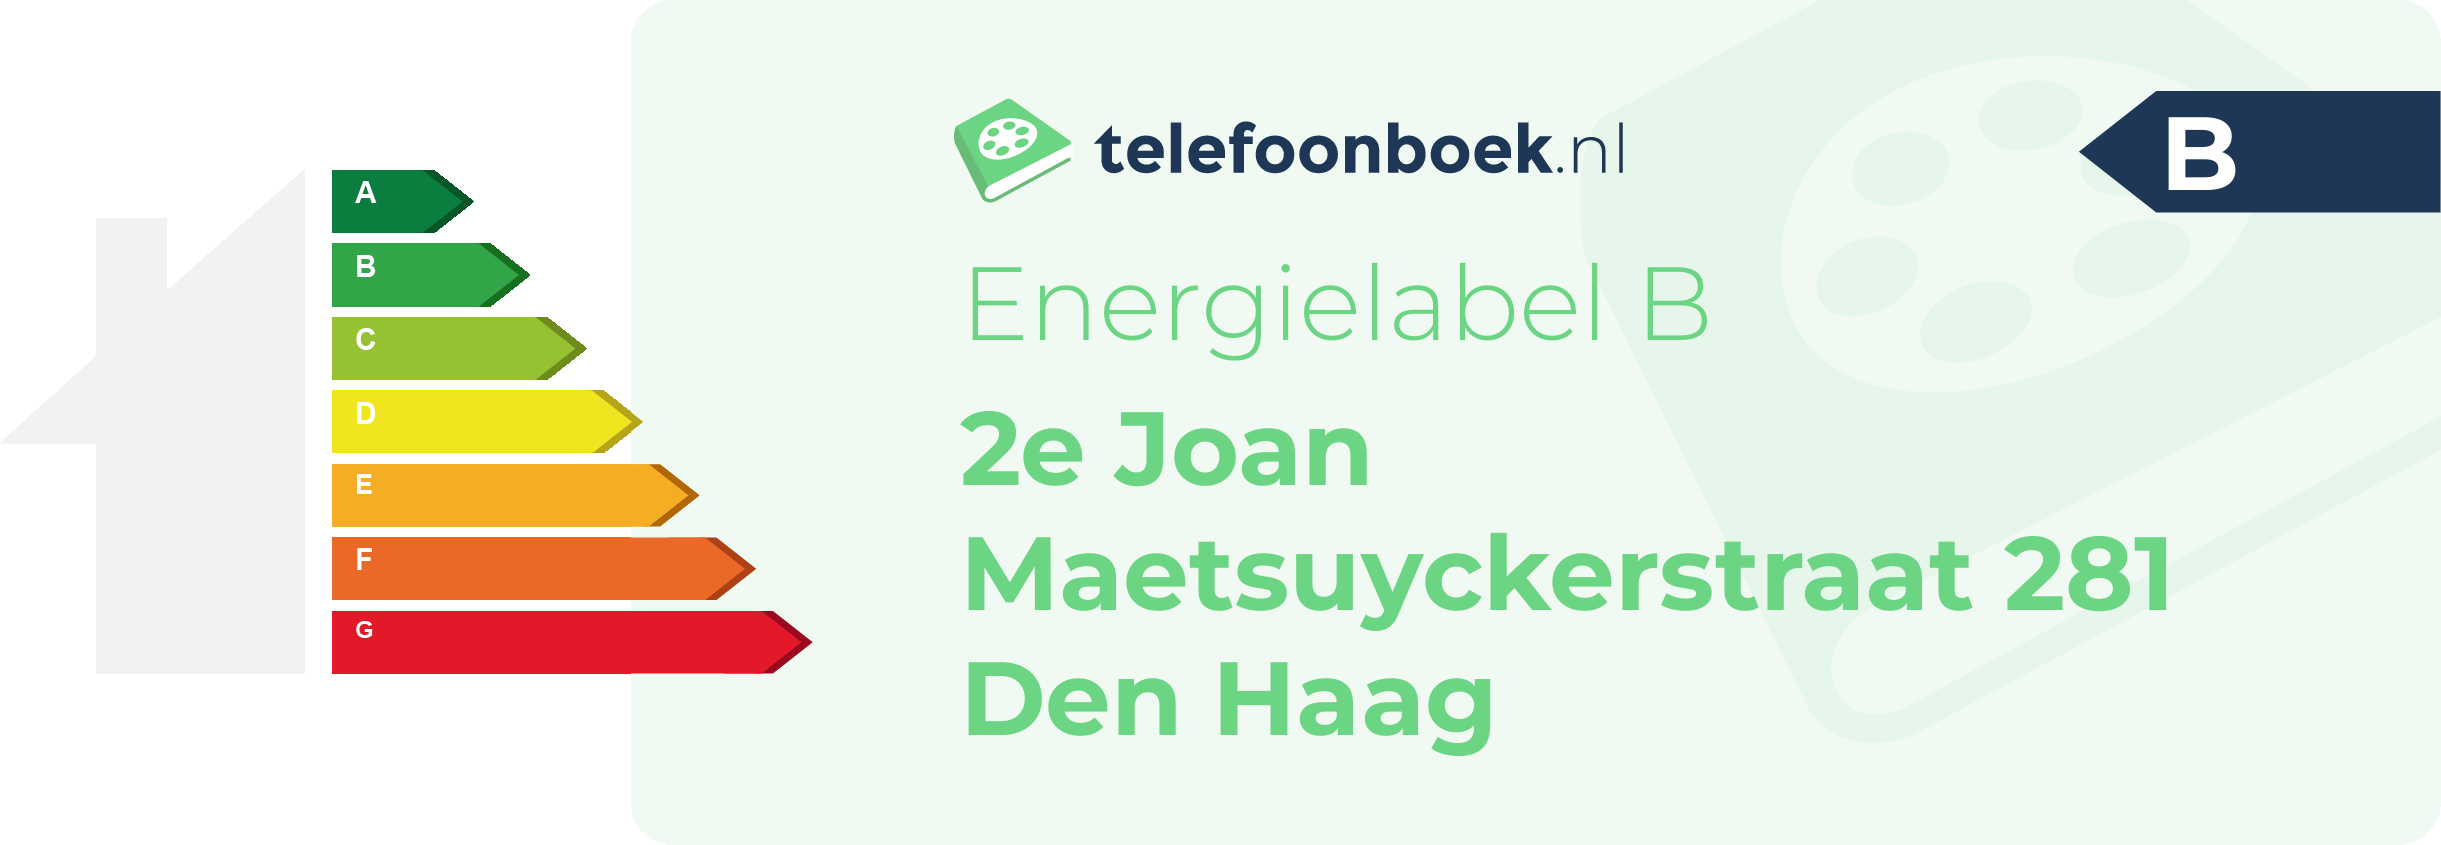 Energielabel 2e Joan Maetsuyckerstraat 281 Den Haag